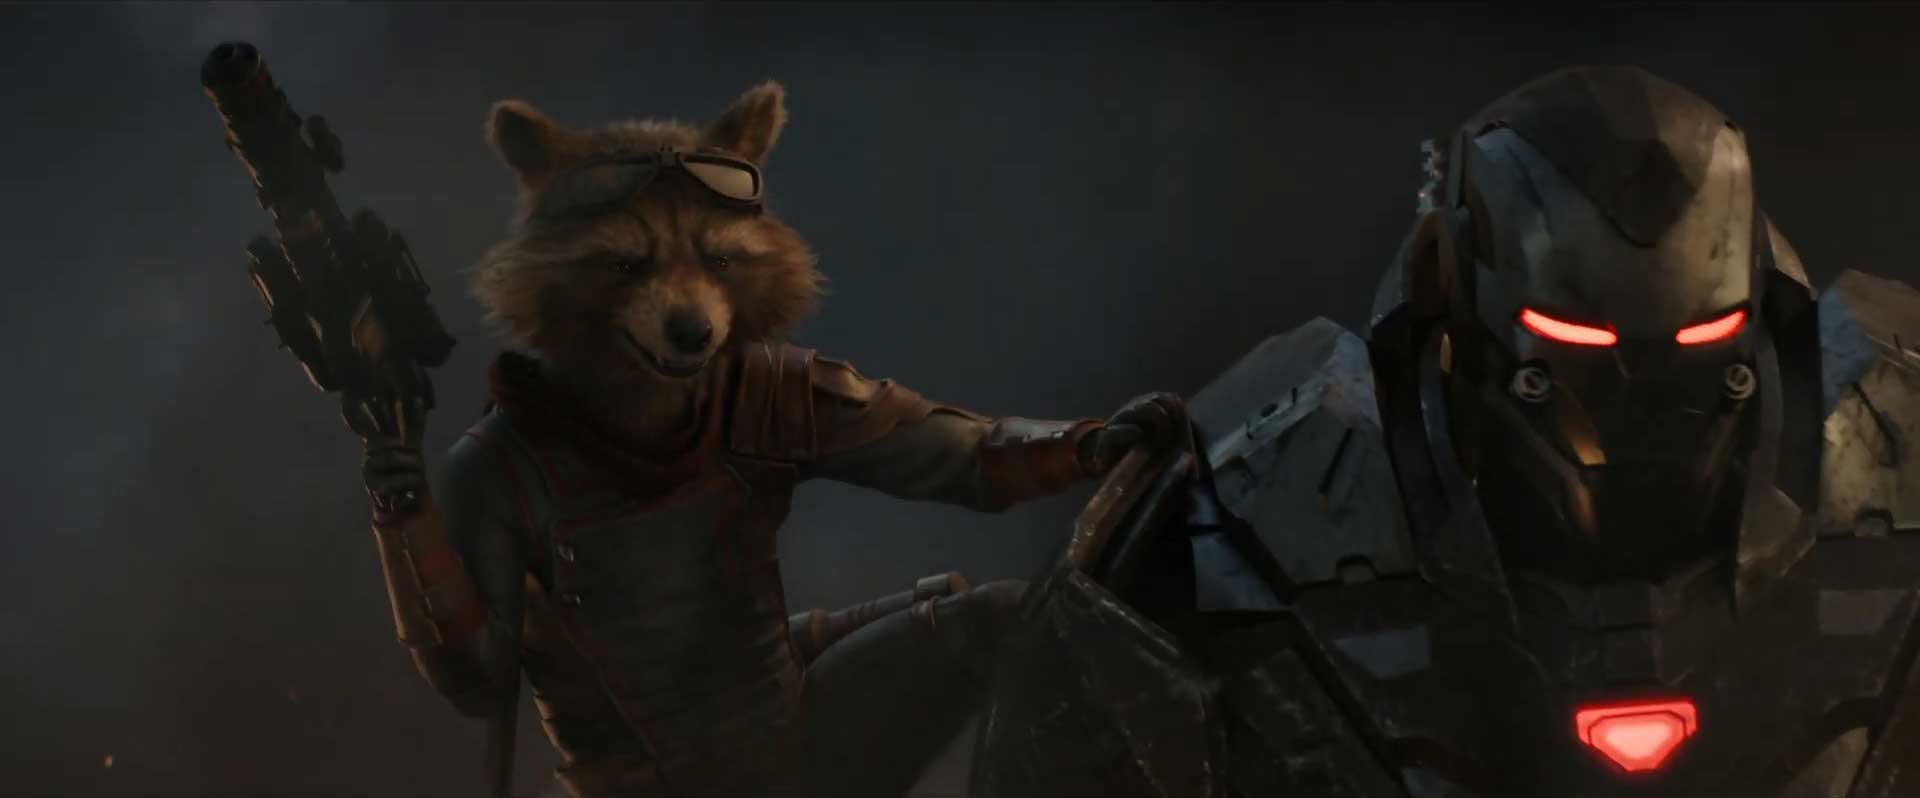 Avengers Endgame Trailer 2 Breakdown - Rocket Raccoon War Machine